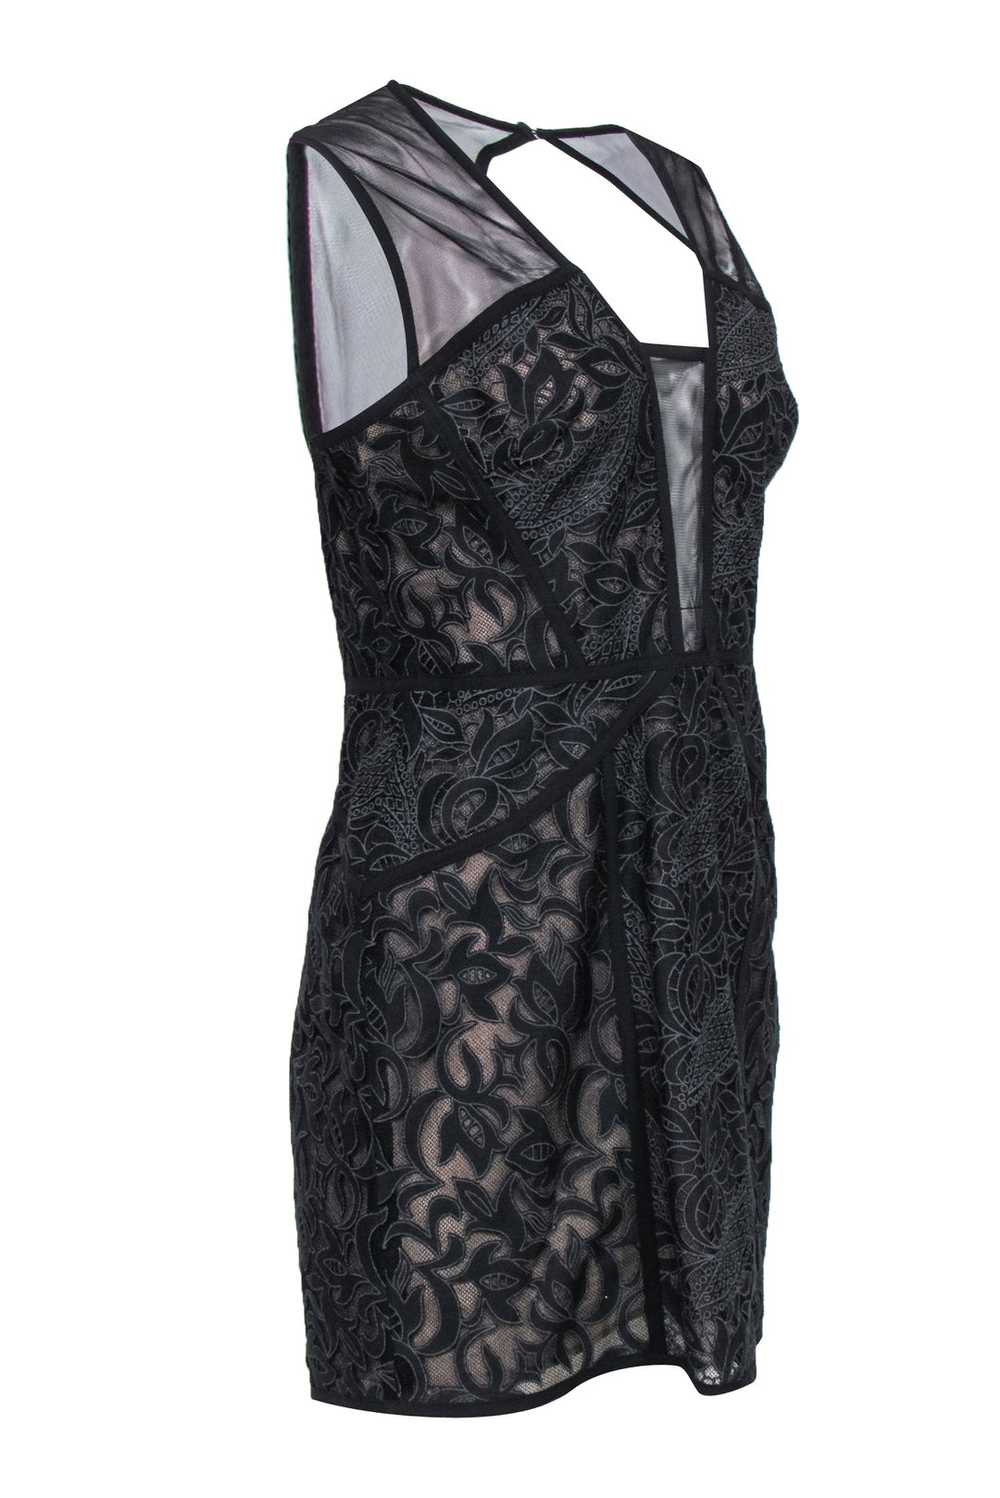 BCBG Max Azria - Black Sheer Lace Mini Dress w/ N… - image 2